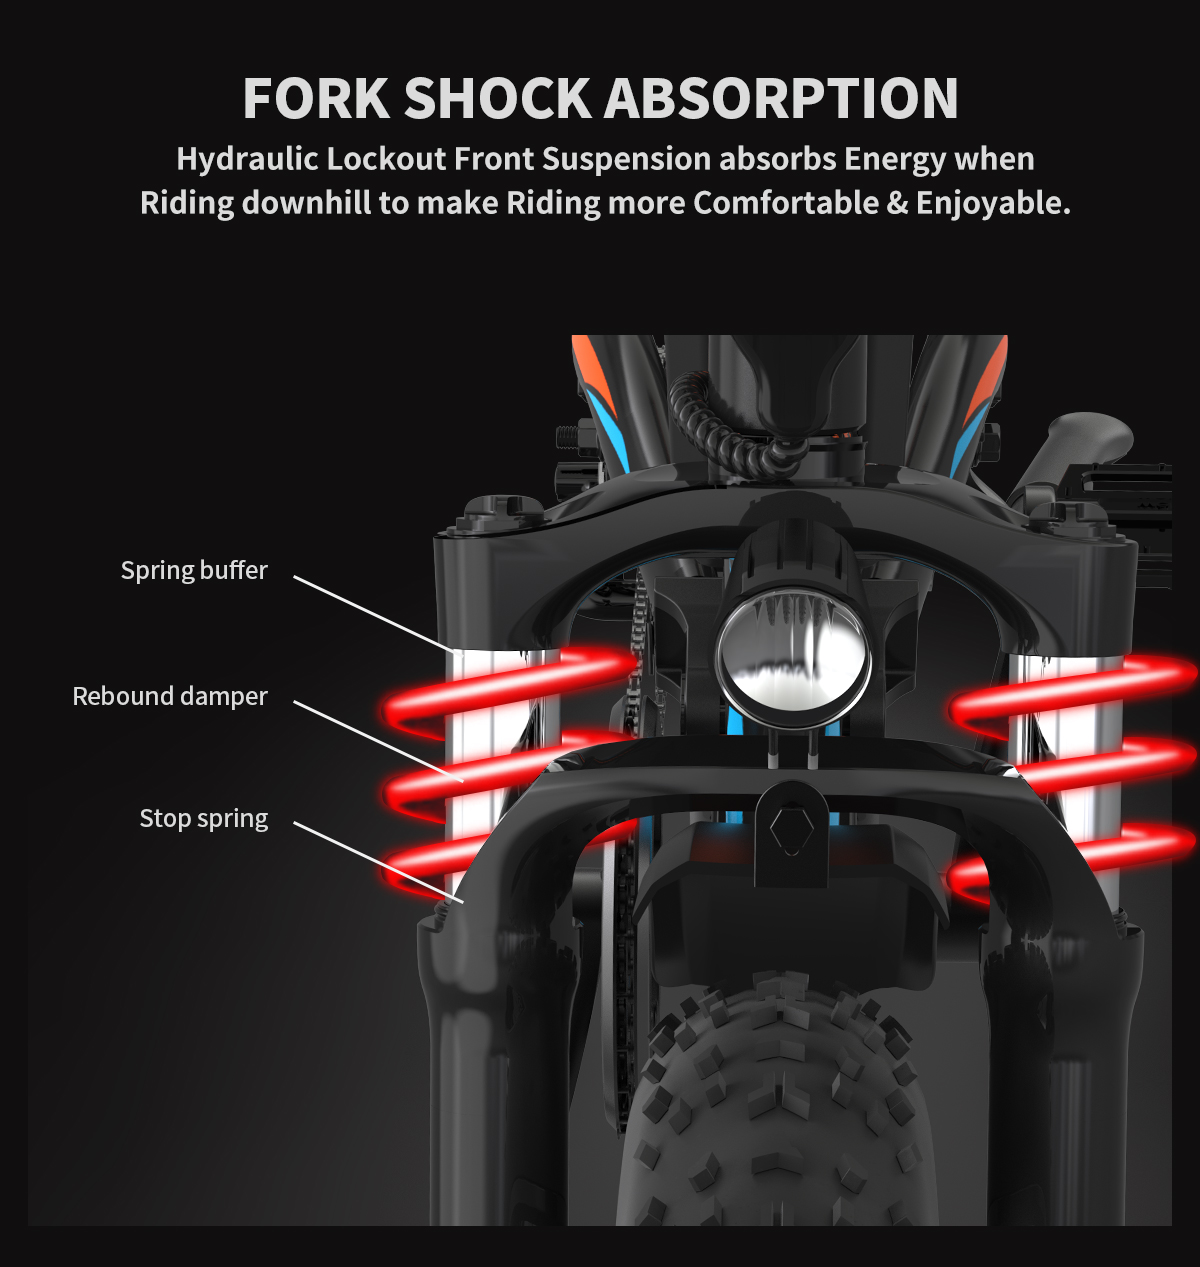 [USA Direct] AOSTIRMOTOR S18-mini 48V 15Ah 500W 20inch Electric Bicycle 25-35KM Max Mileage 140KG Max Load Electric Bike